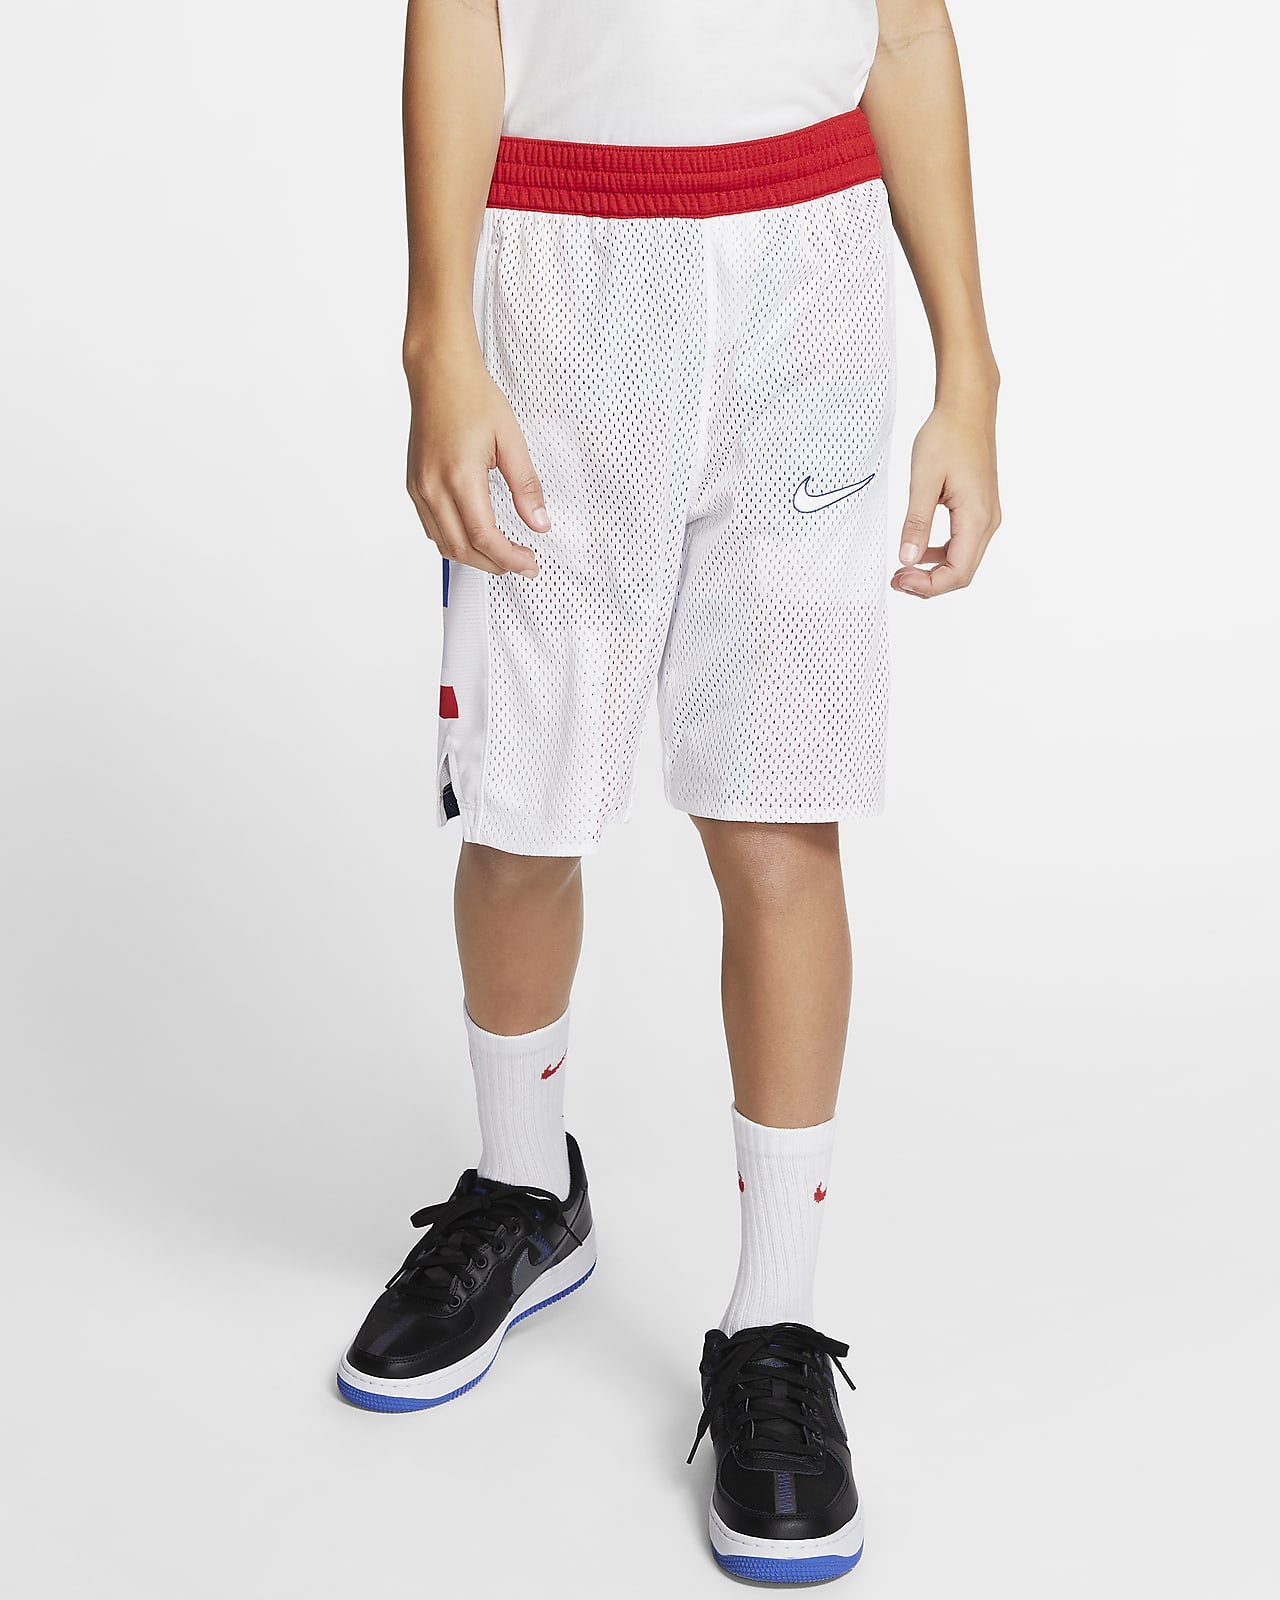 Reversible Basketball Shorts. Nike ID